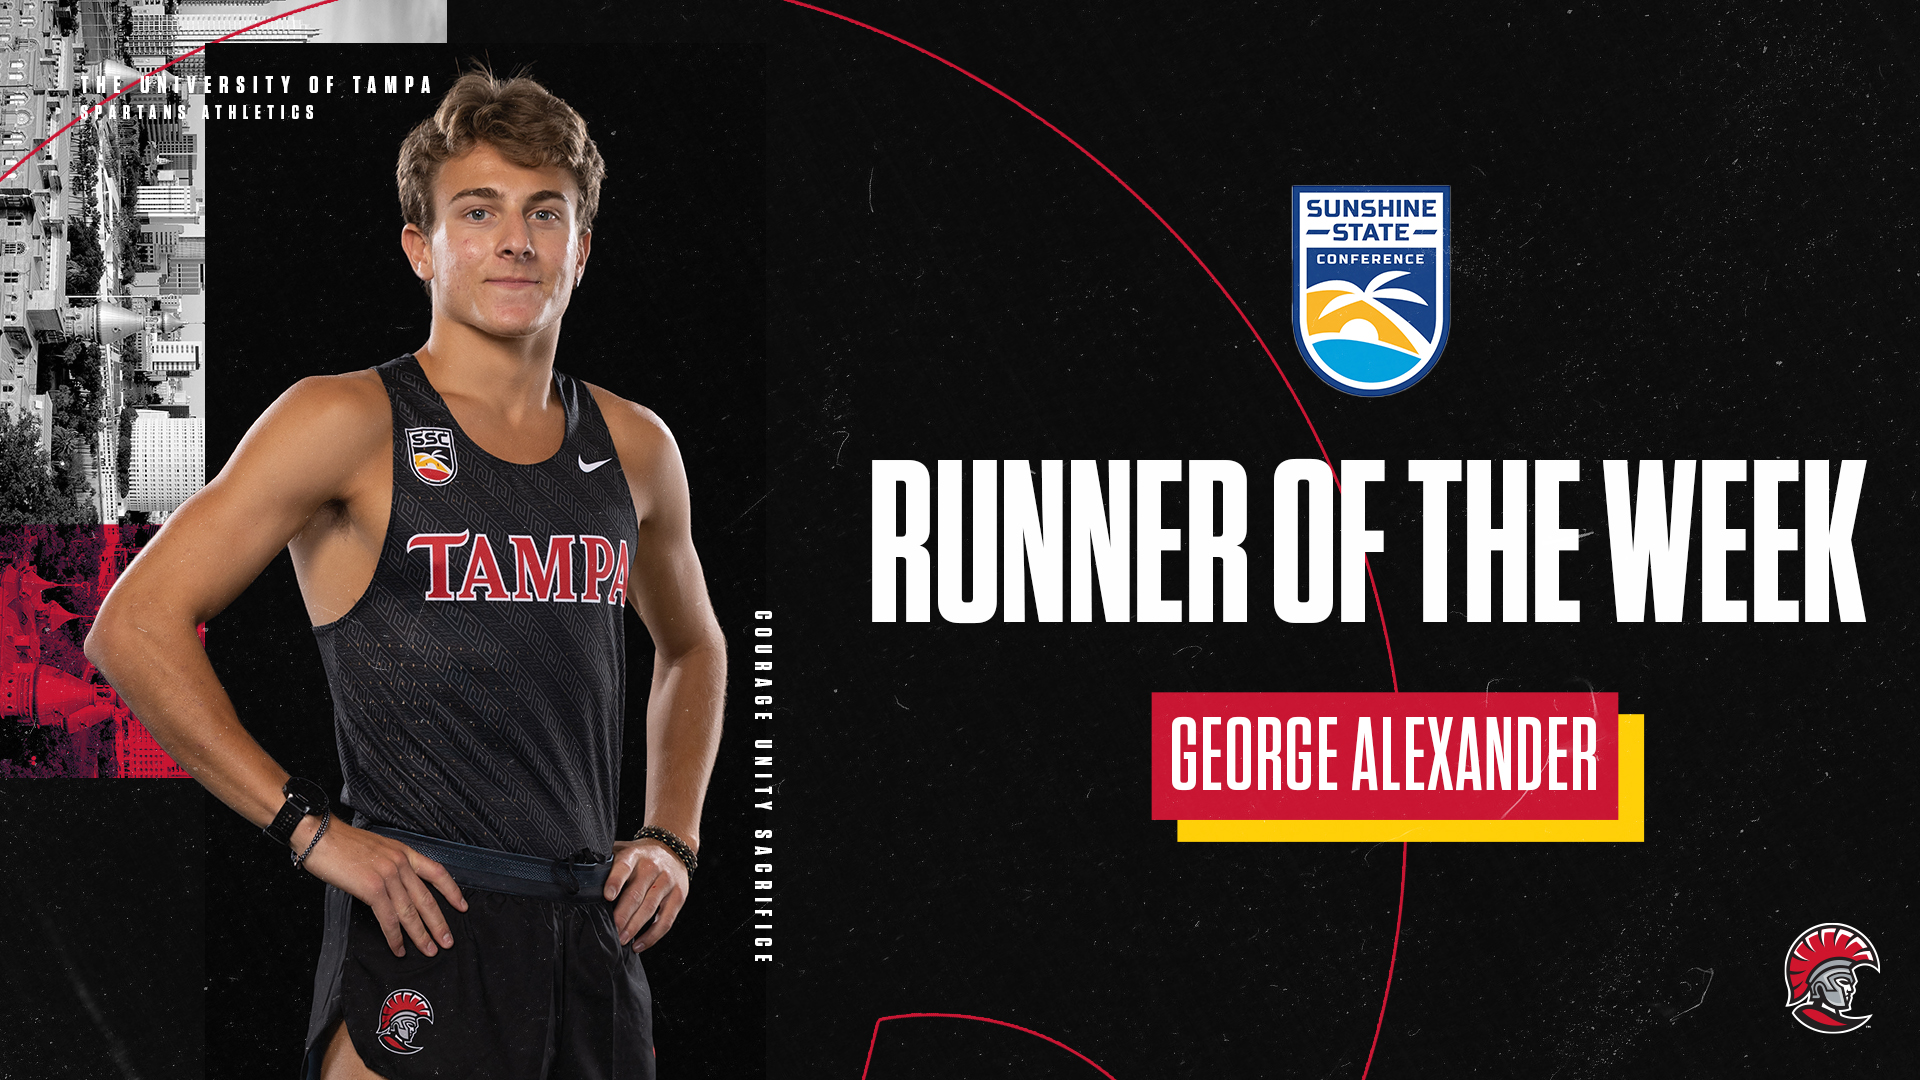 George Alexander Named SSC Runner of the Week